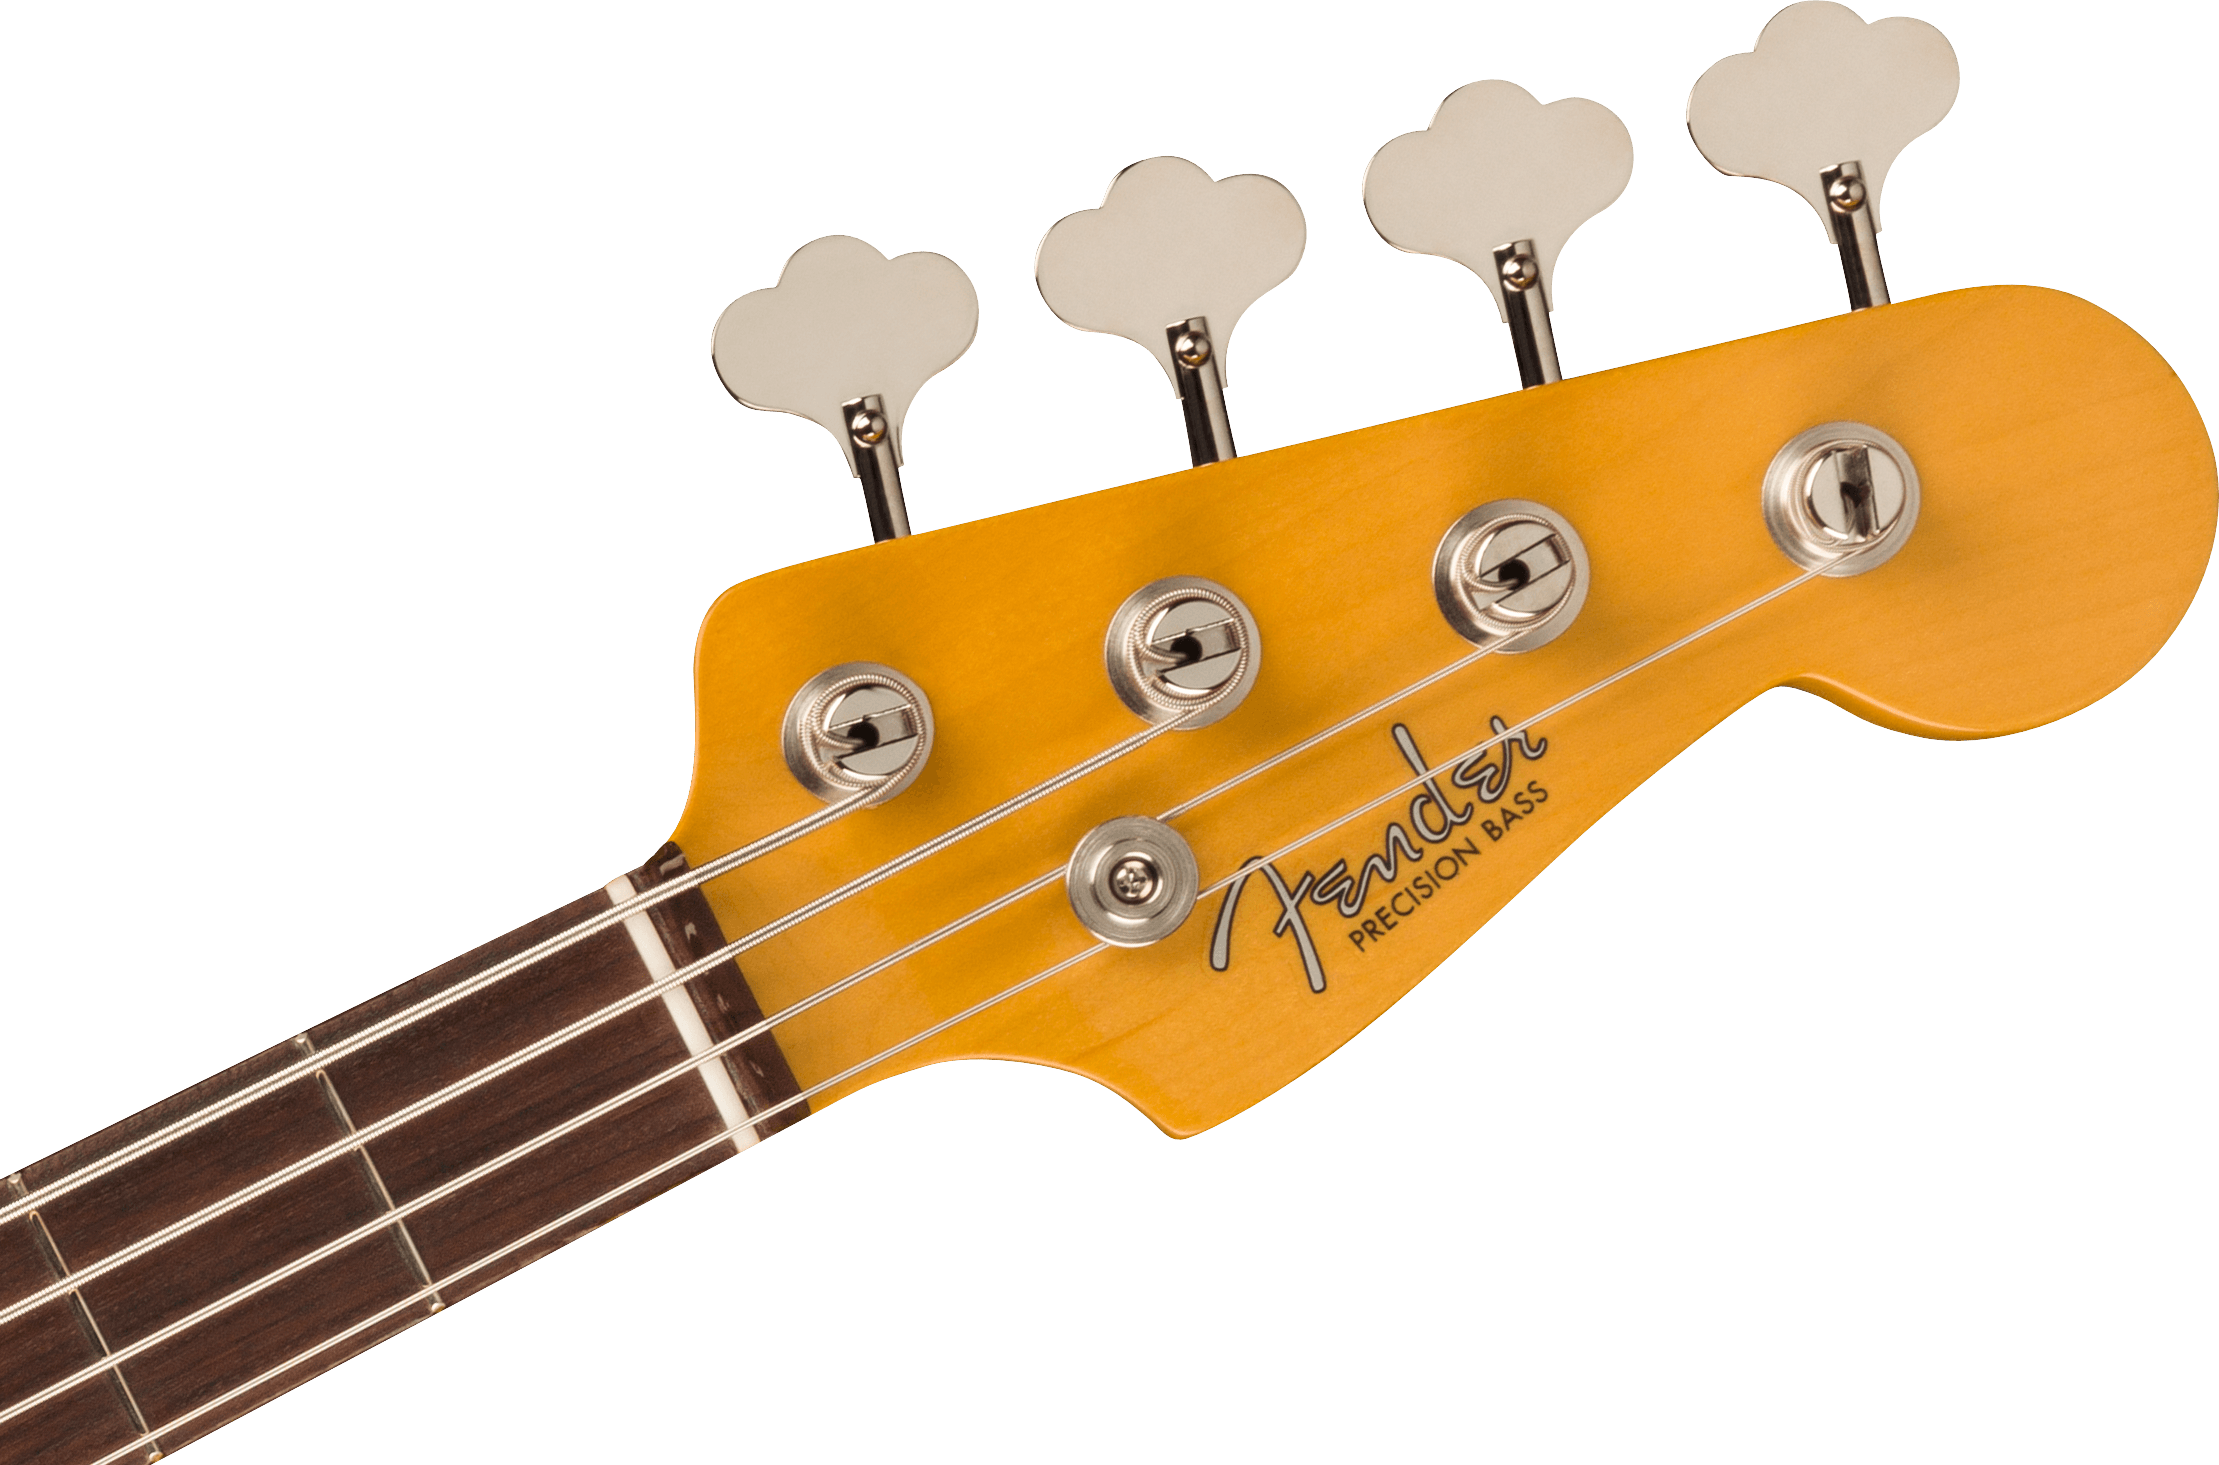 American Vintage II 1960 Precision Bass®, Rosewood Fingerboard, 3-Color Sunburst追加画像